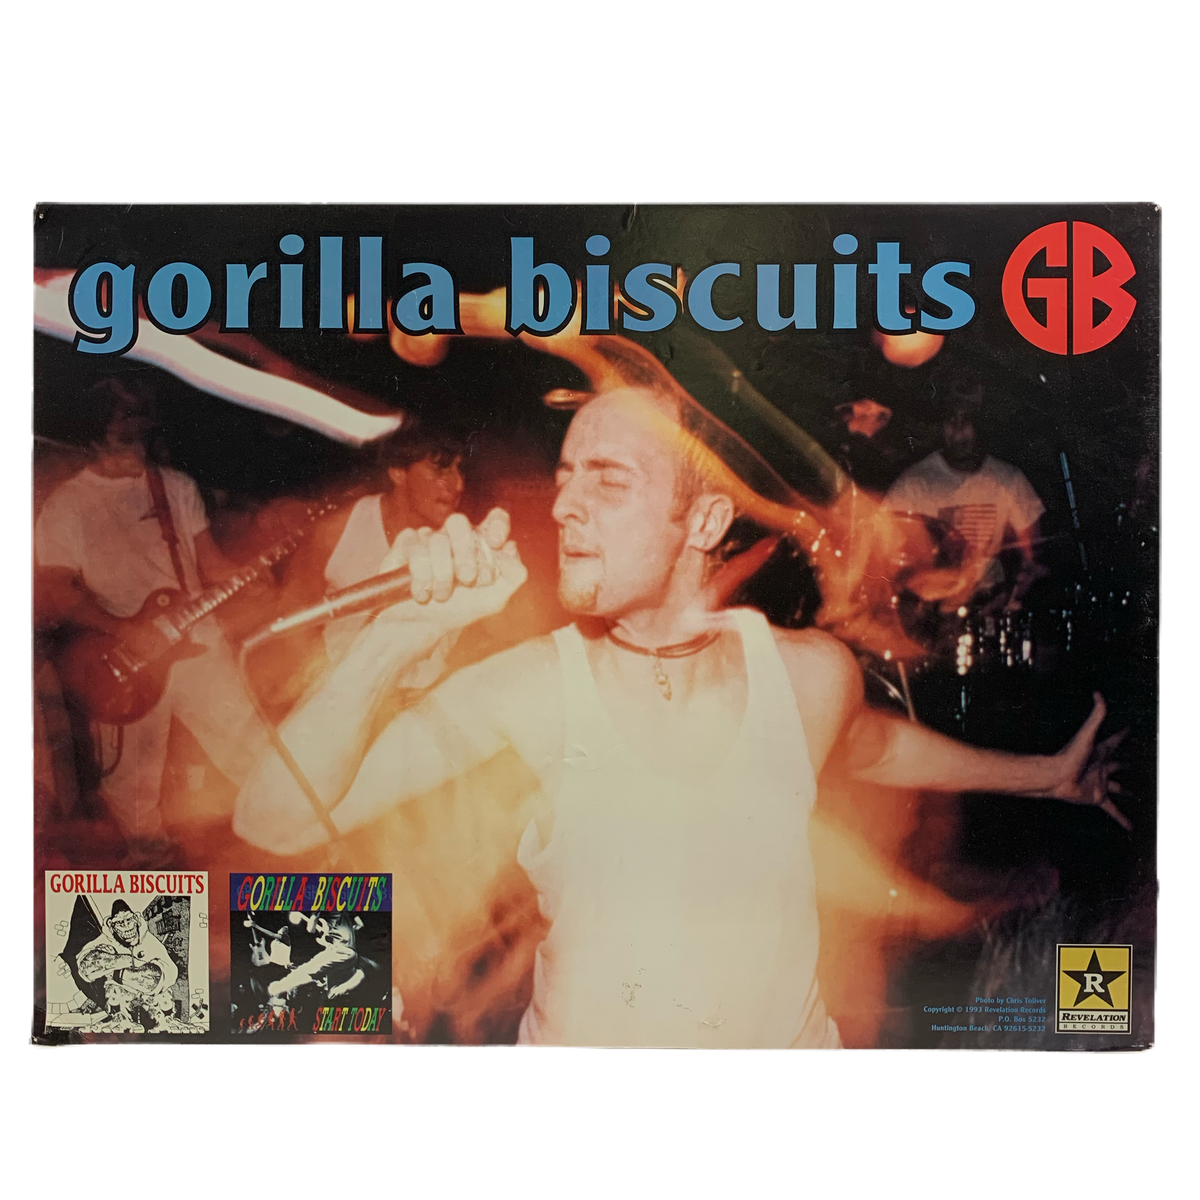 Vintage Gorilla Biscuits “Revelation Récords” Promotional Foam Core Poster - jointcustodydc